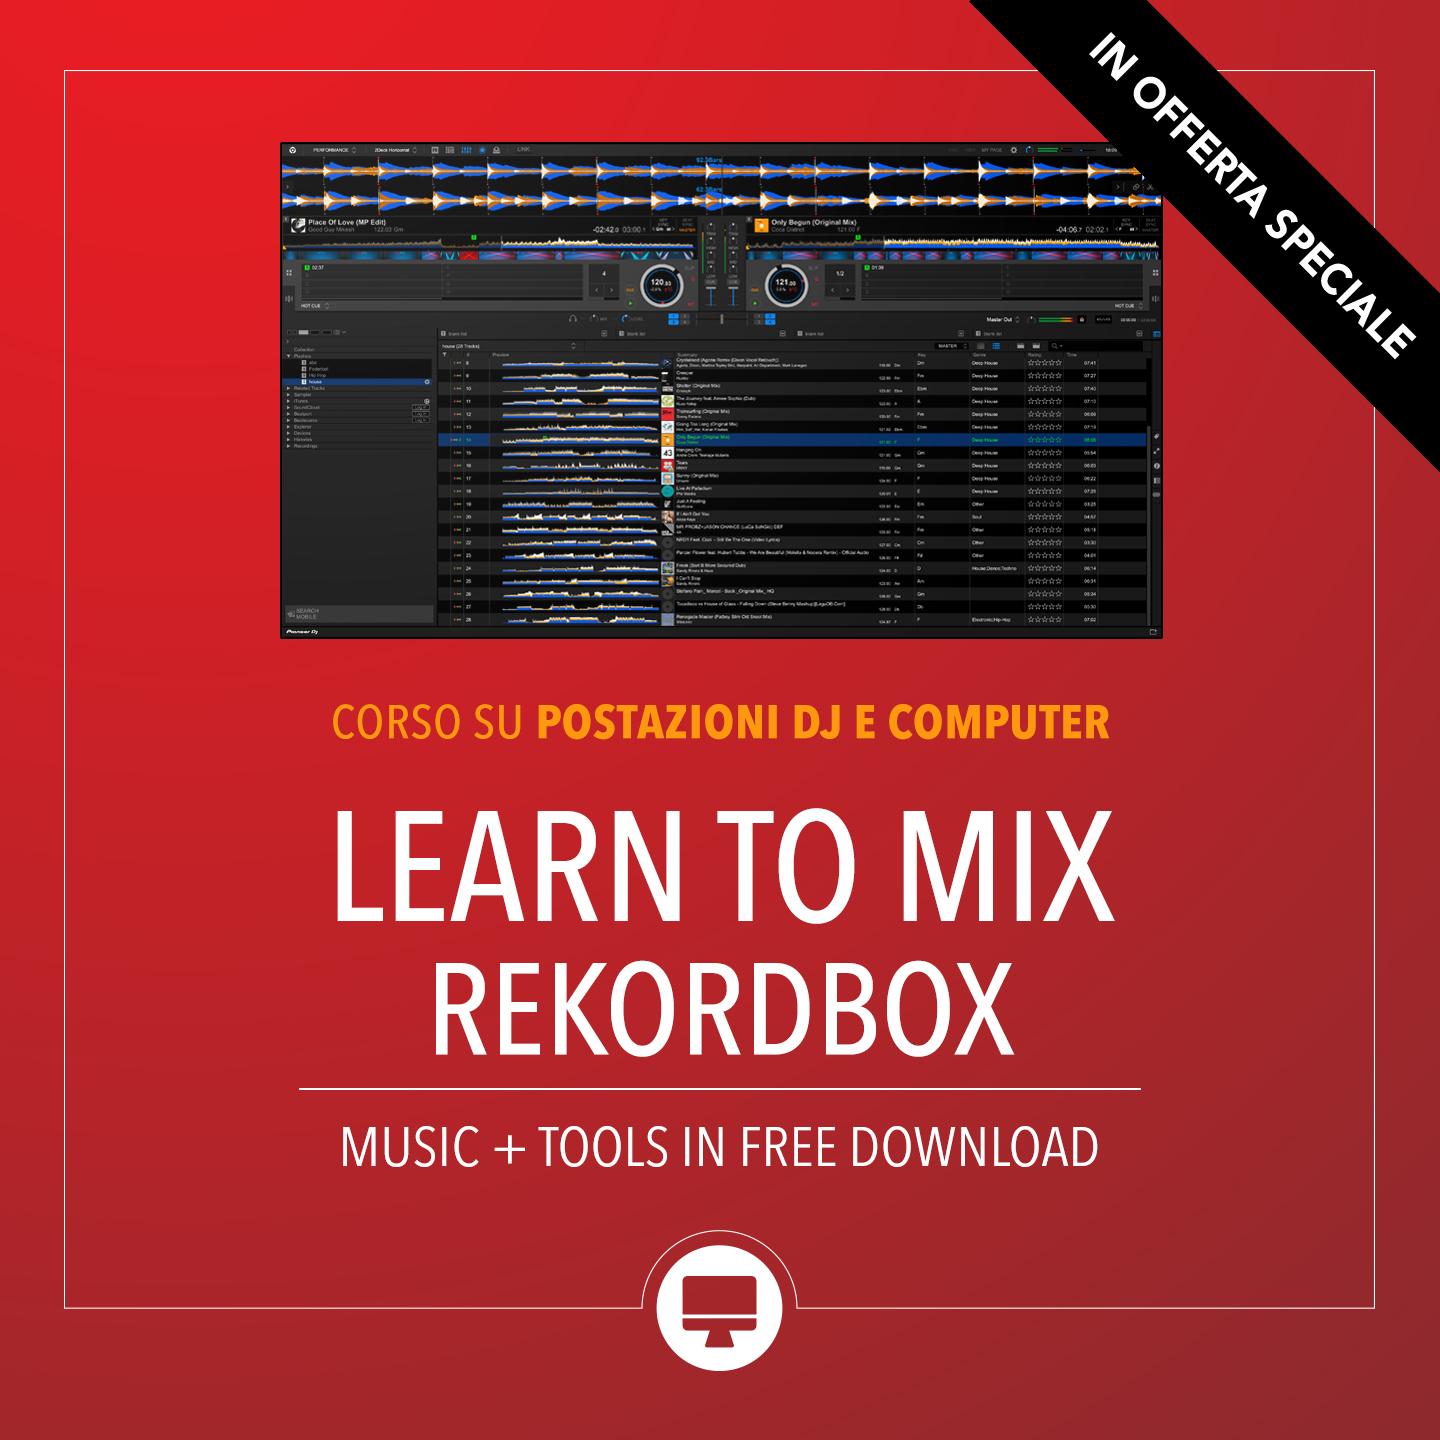 Corso Rekordbox Learn to mix in sede Nova Dj Academy